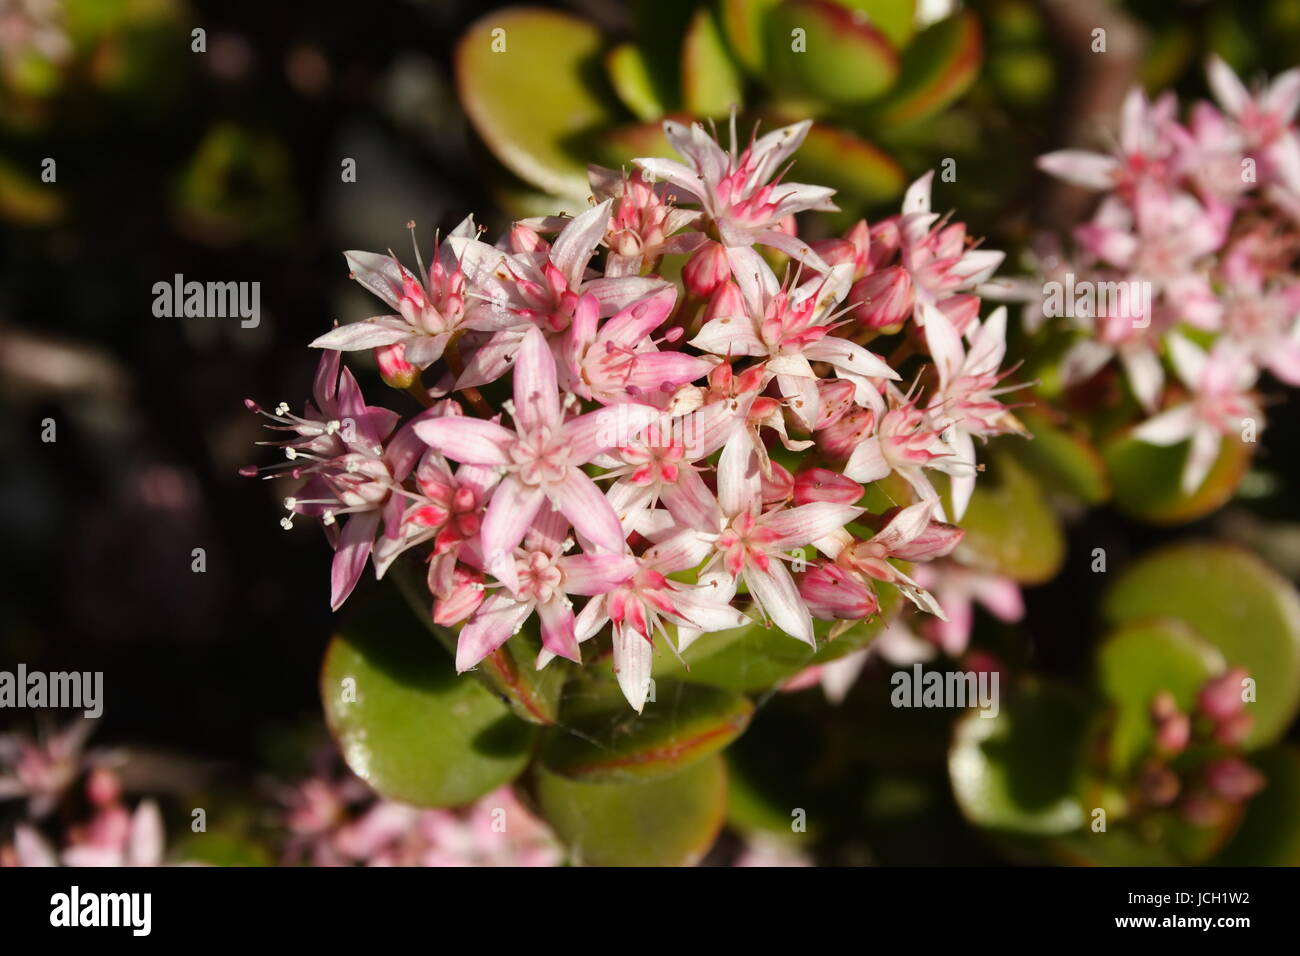 Crassula Ovata Flowers close up Stock Photo